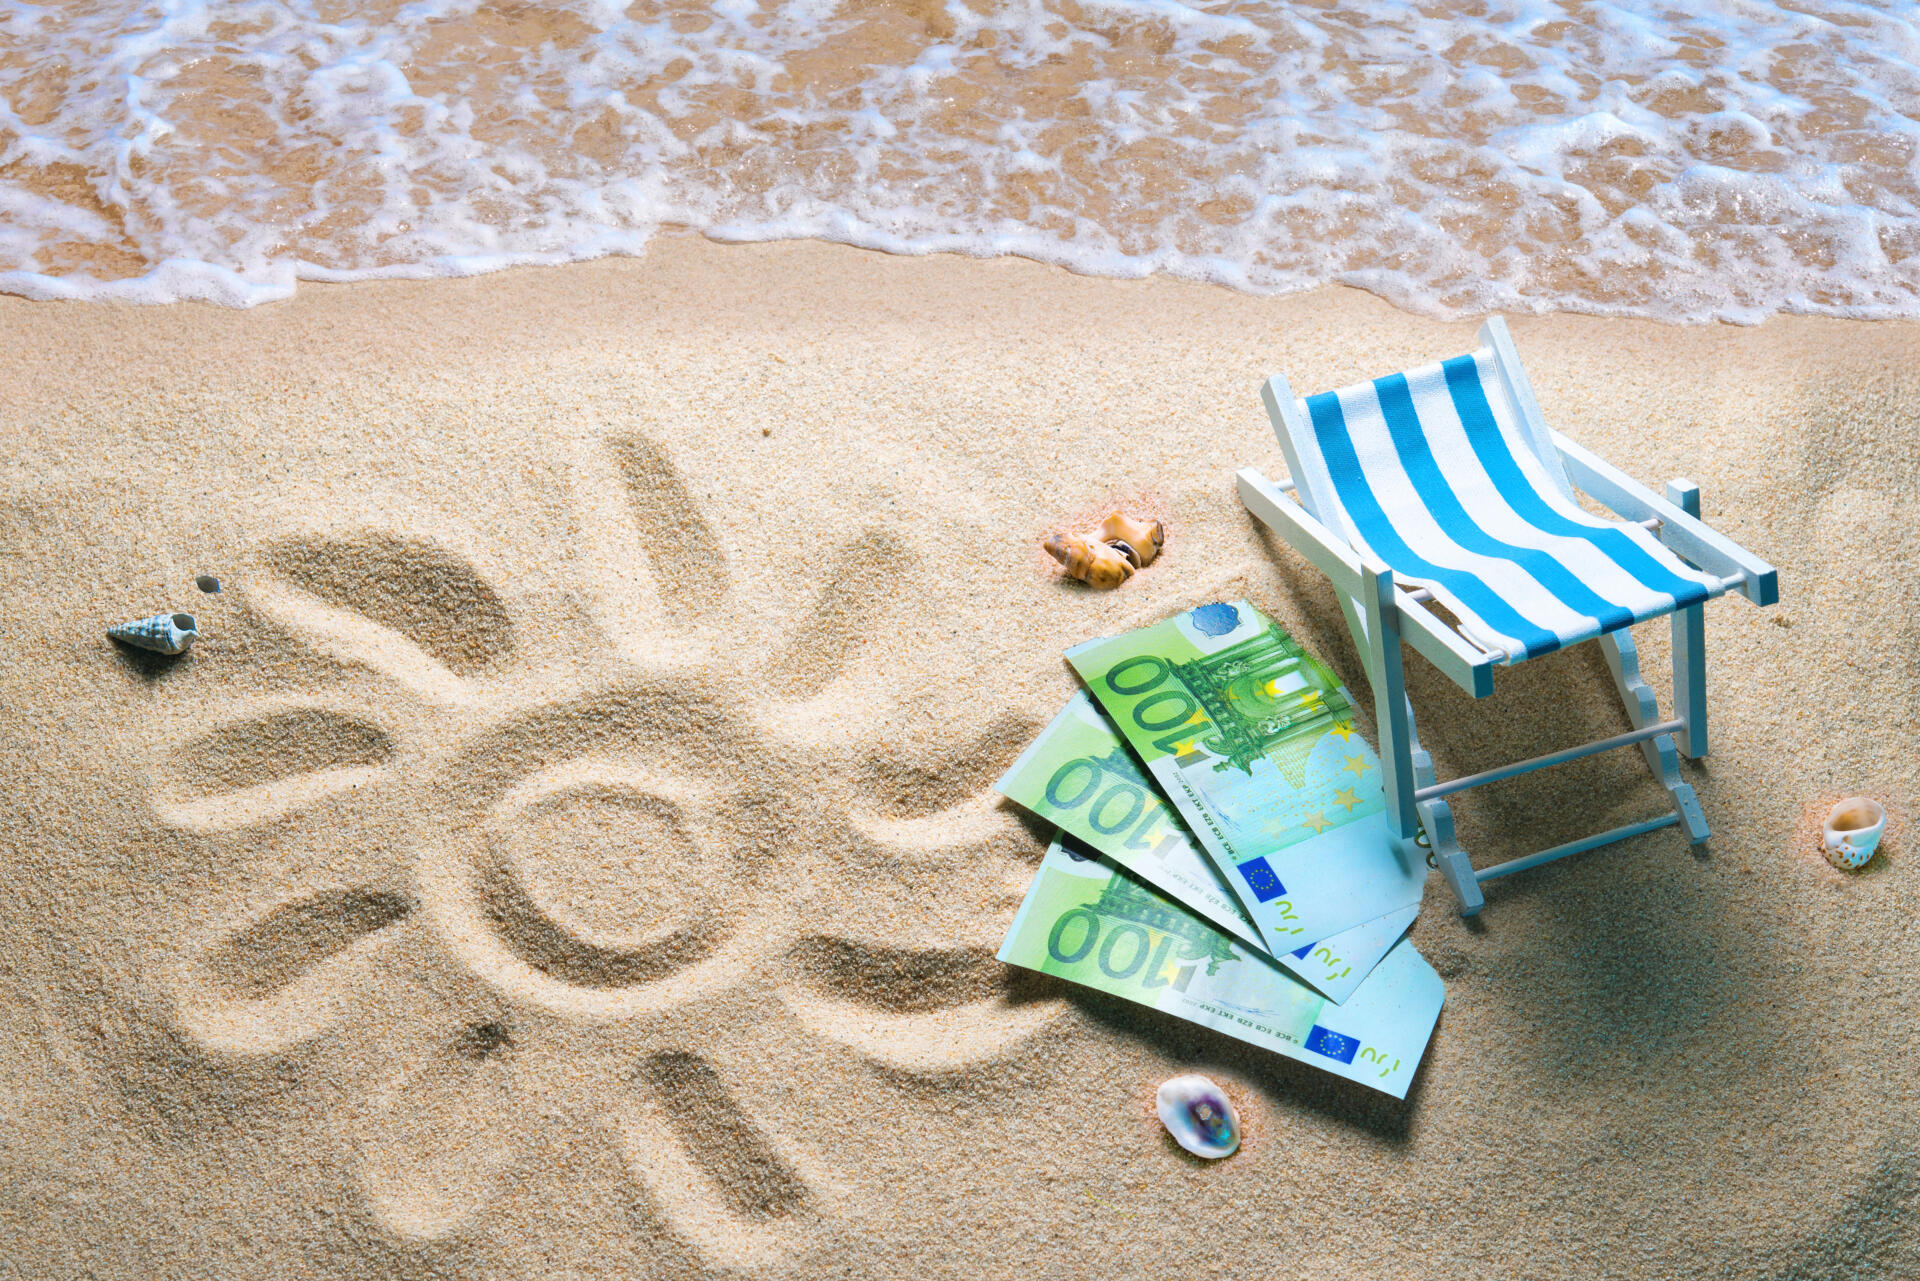 Deckchair with euro bills on a beach with a sun drawn on the sand. Travel money savings concept